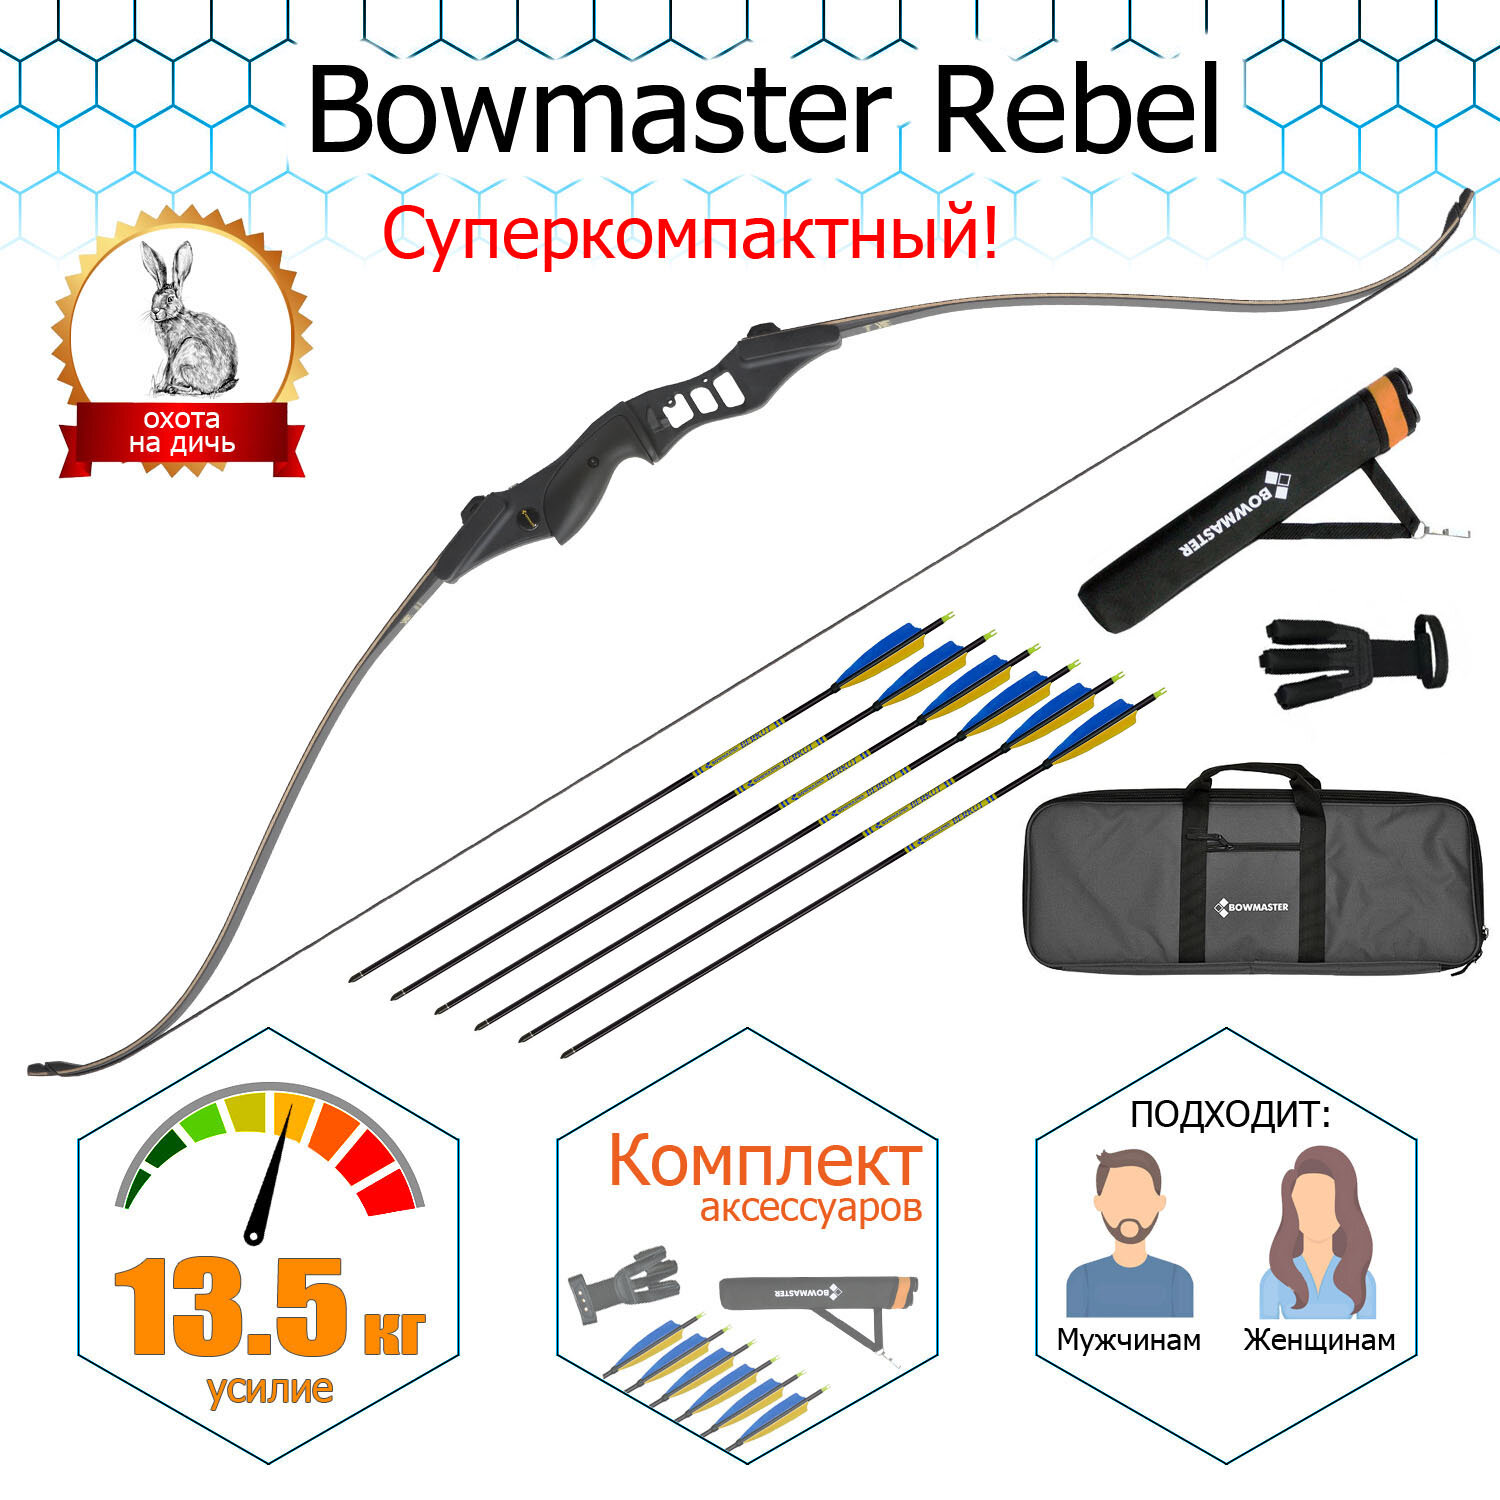 Традиционный лук для лука Bowmaster Rebel 56/30 Rh в комплекте